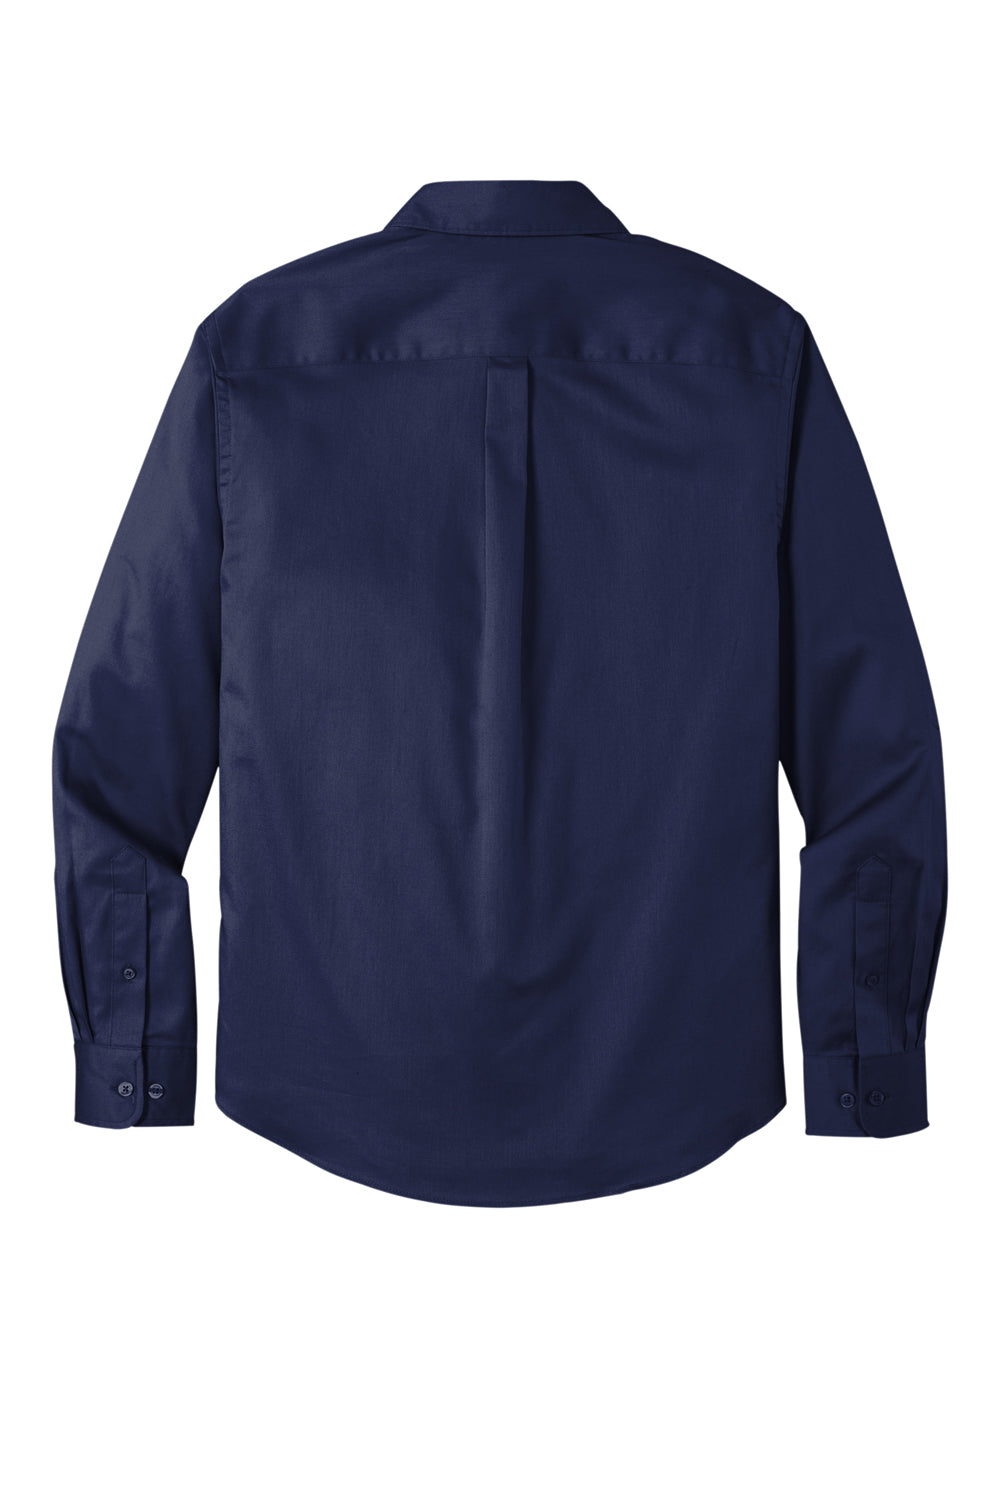 Port Authority W808 SuperPro Wrinkle Resistant React Long Sleeve Button Down Shirt w/ Pocket True Navy Blue Flat Back